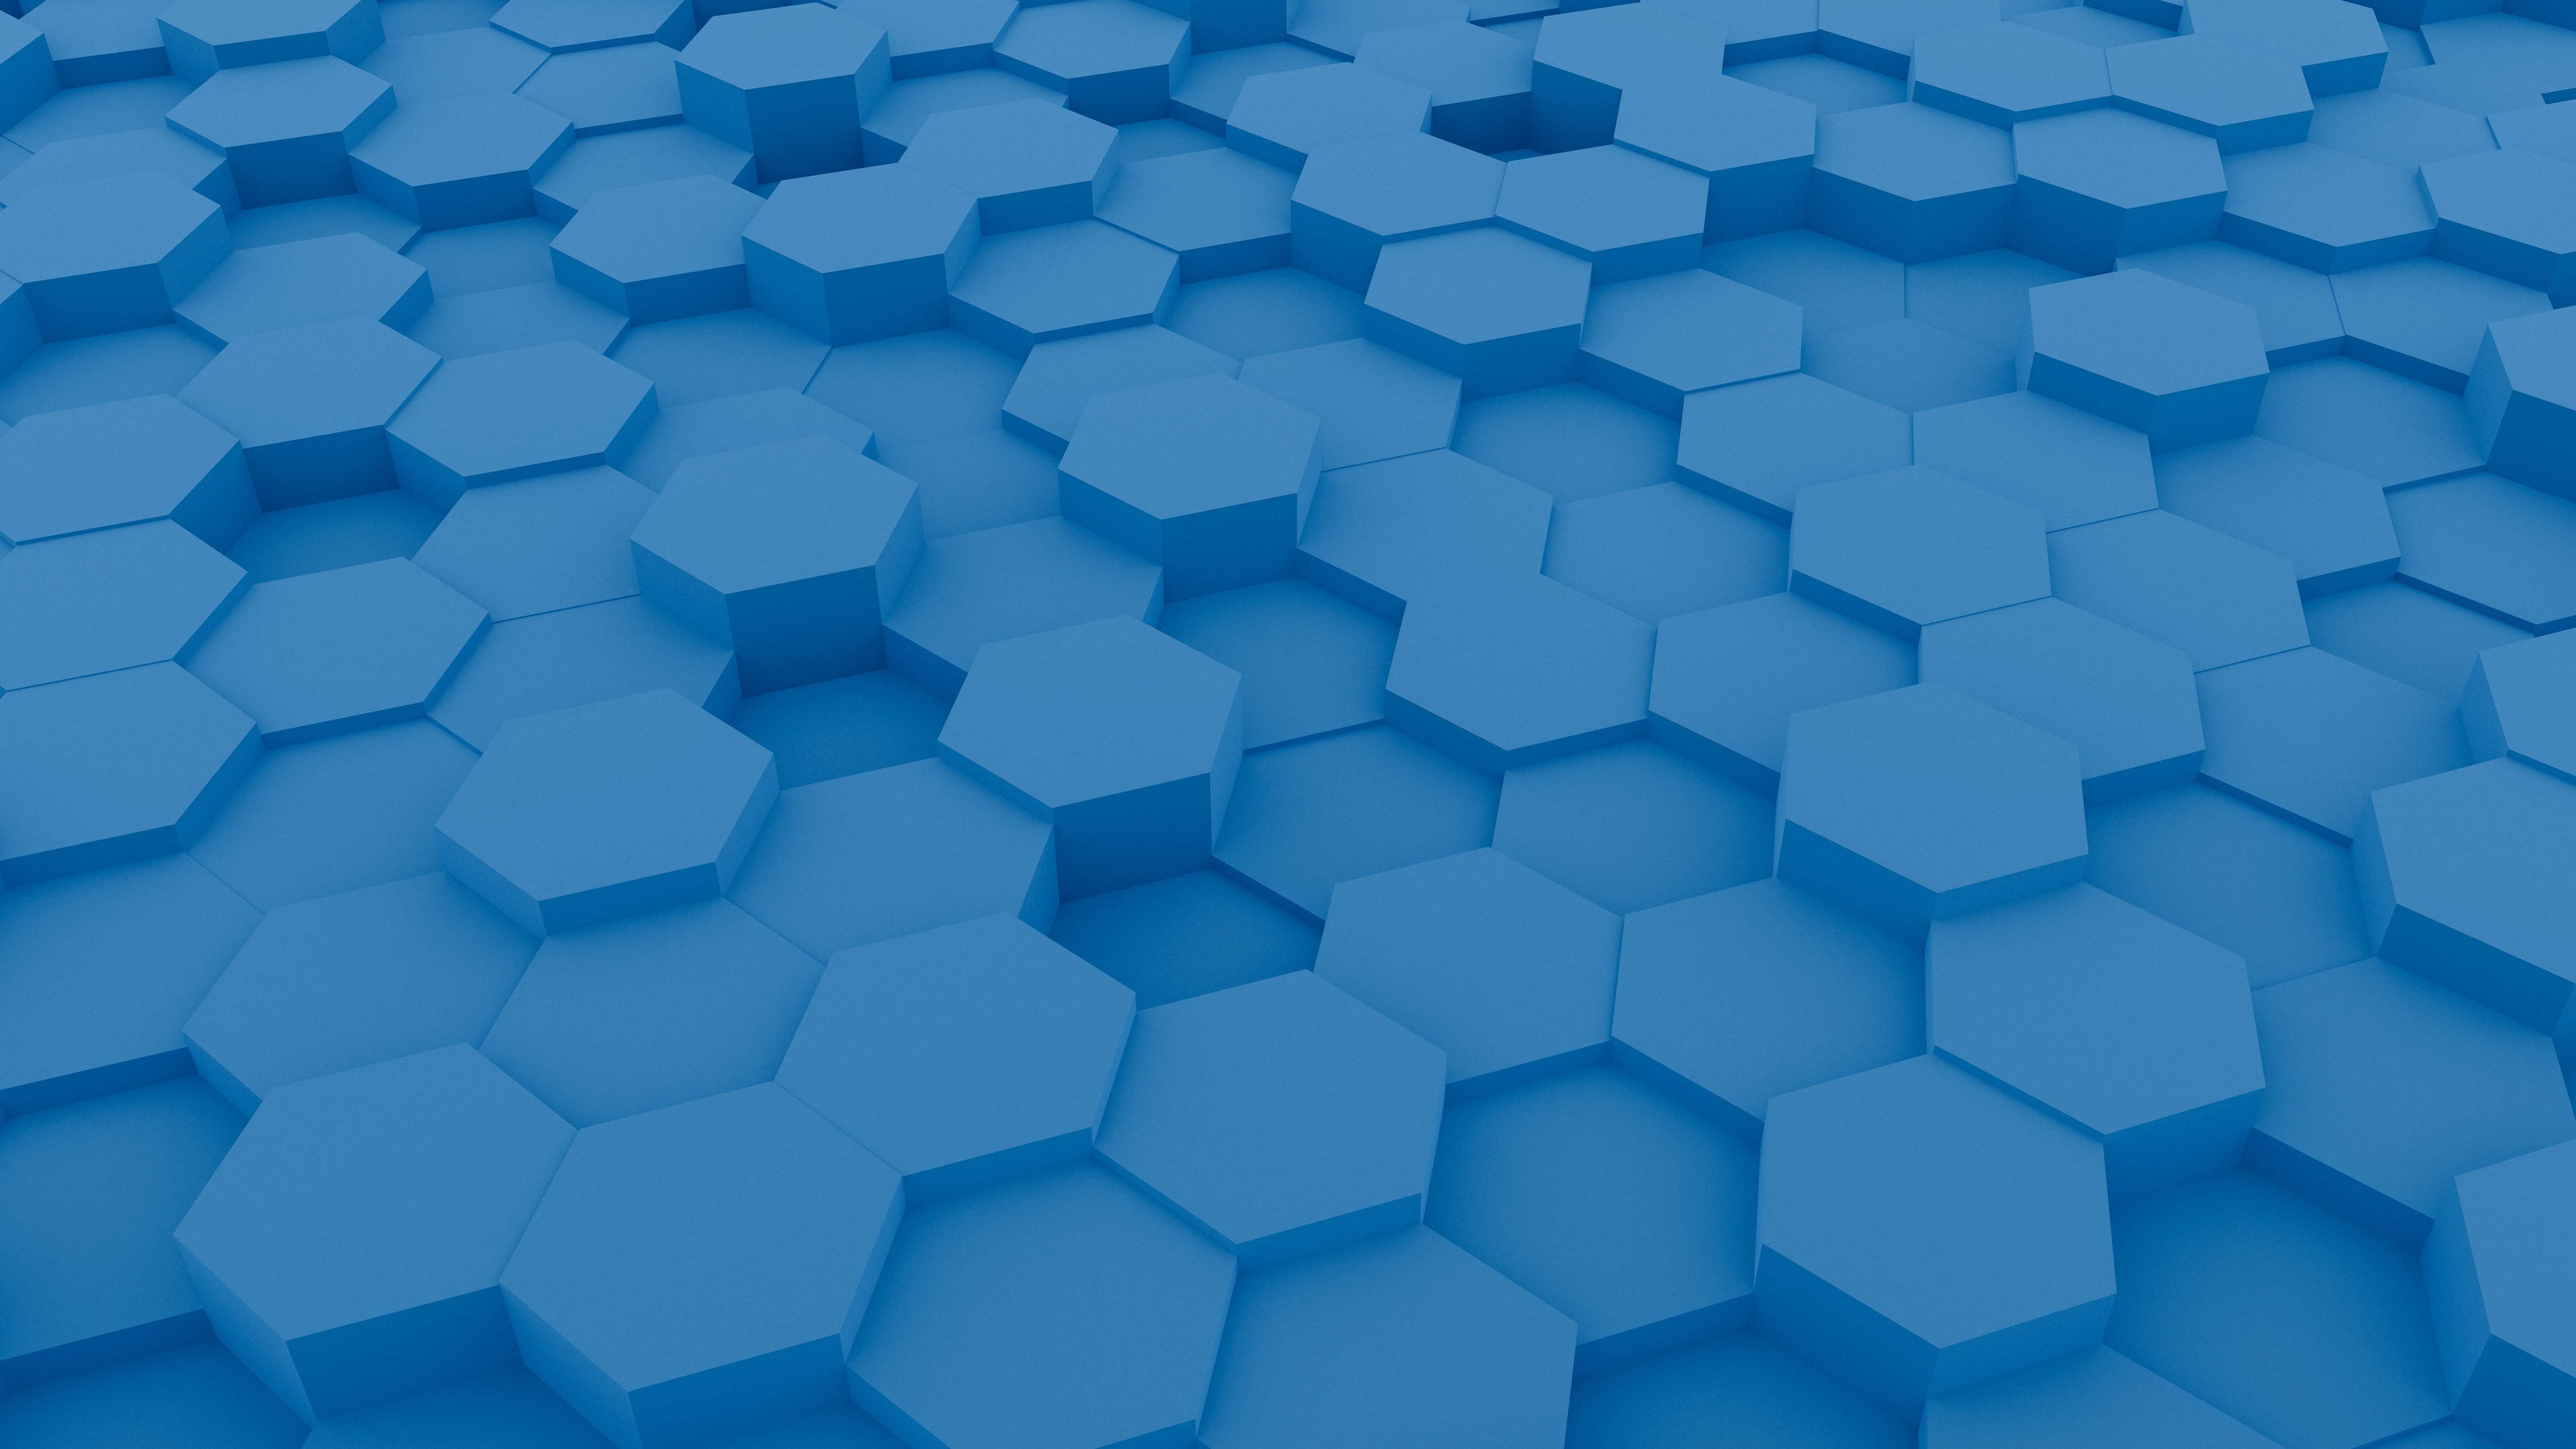 Photo by Pramod Tiwari - 3D, blue hexagonal tiles with varied heights